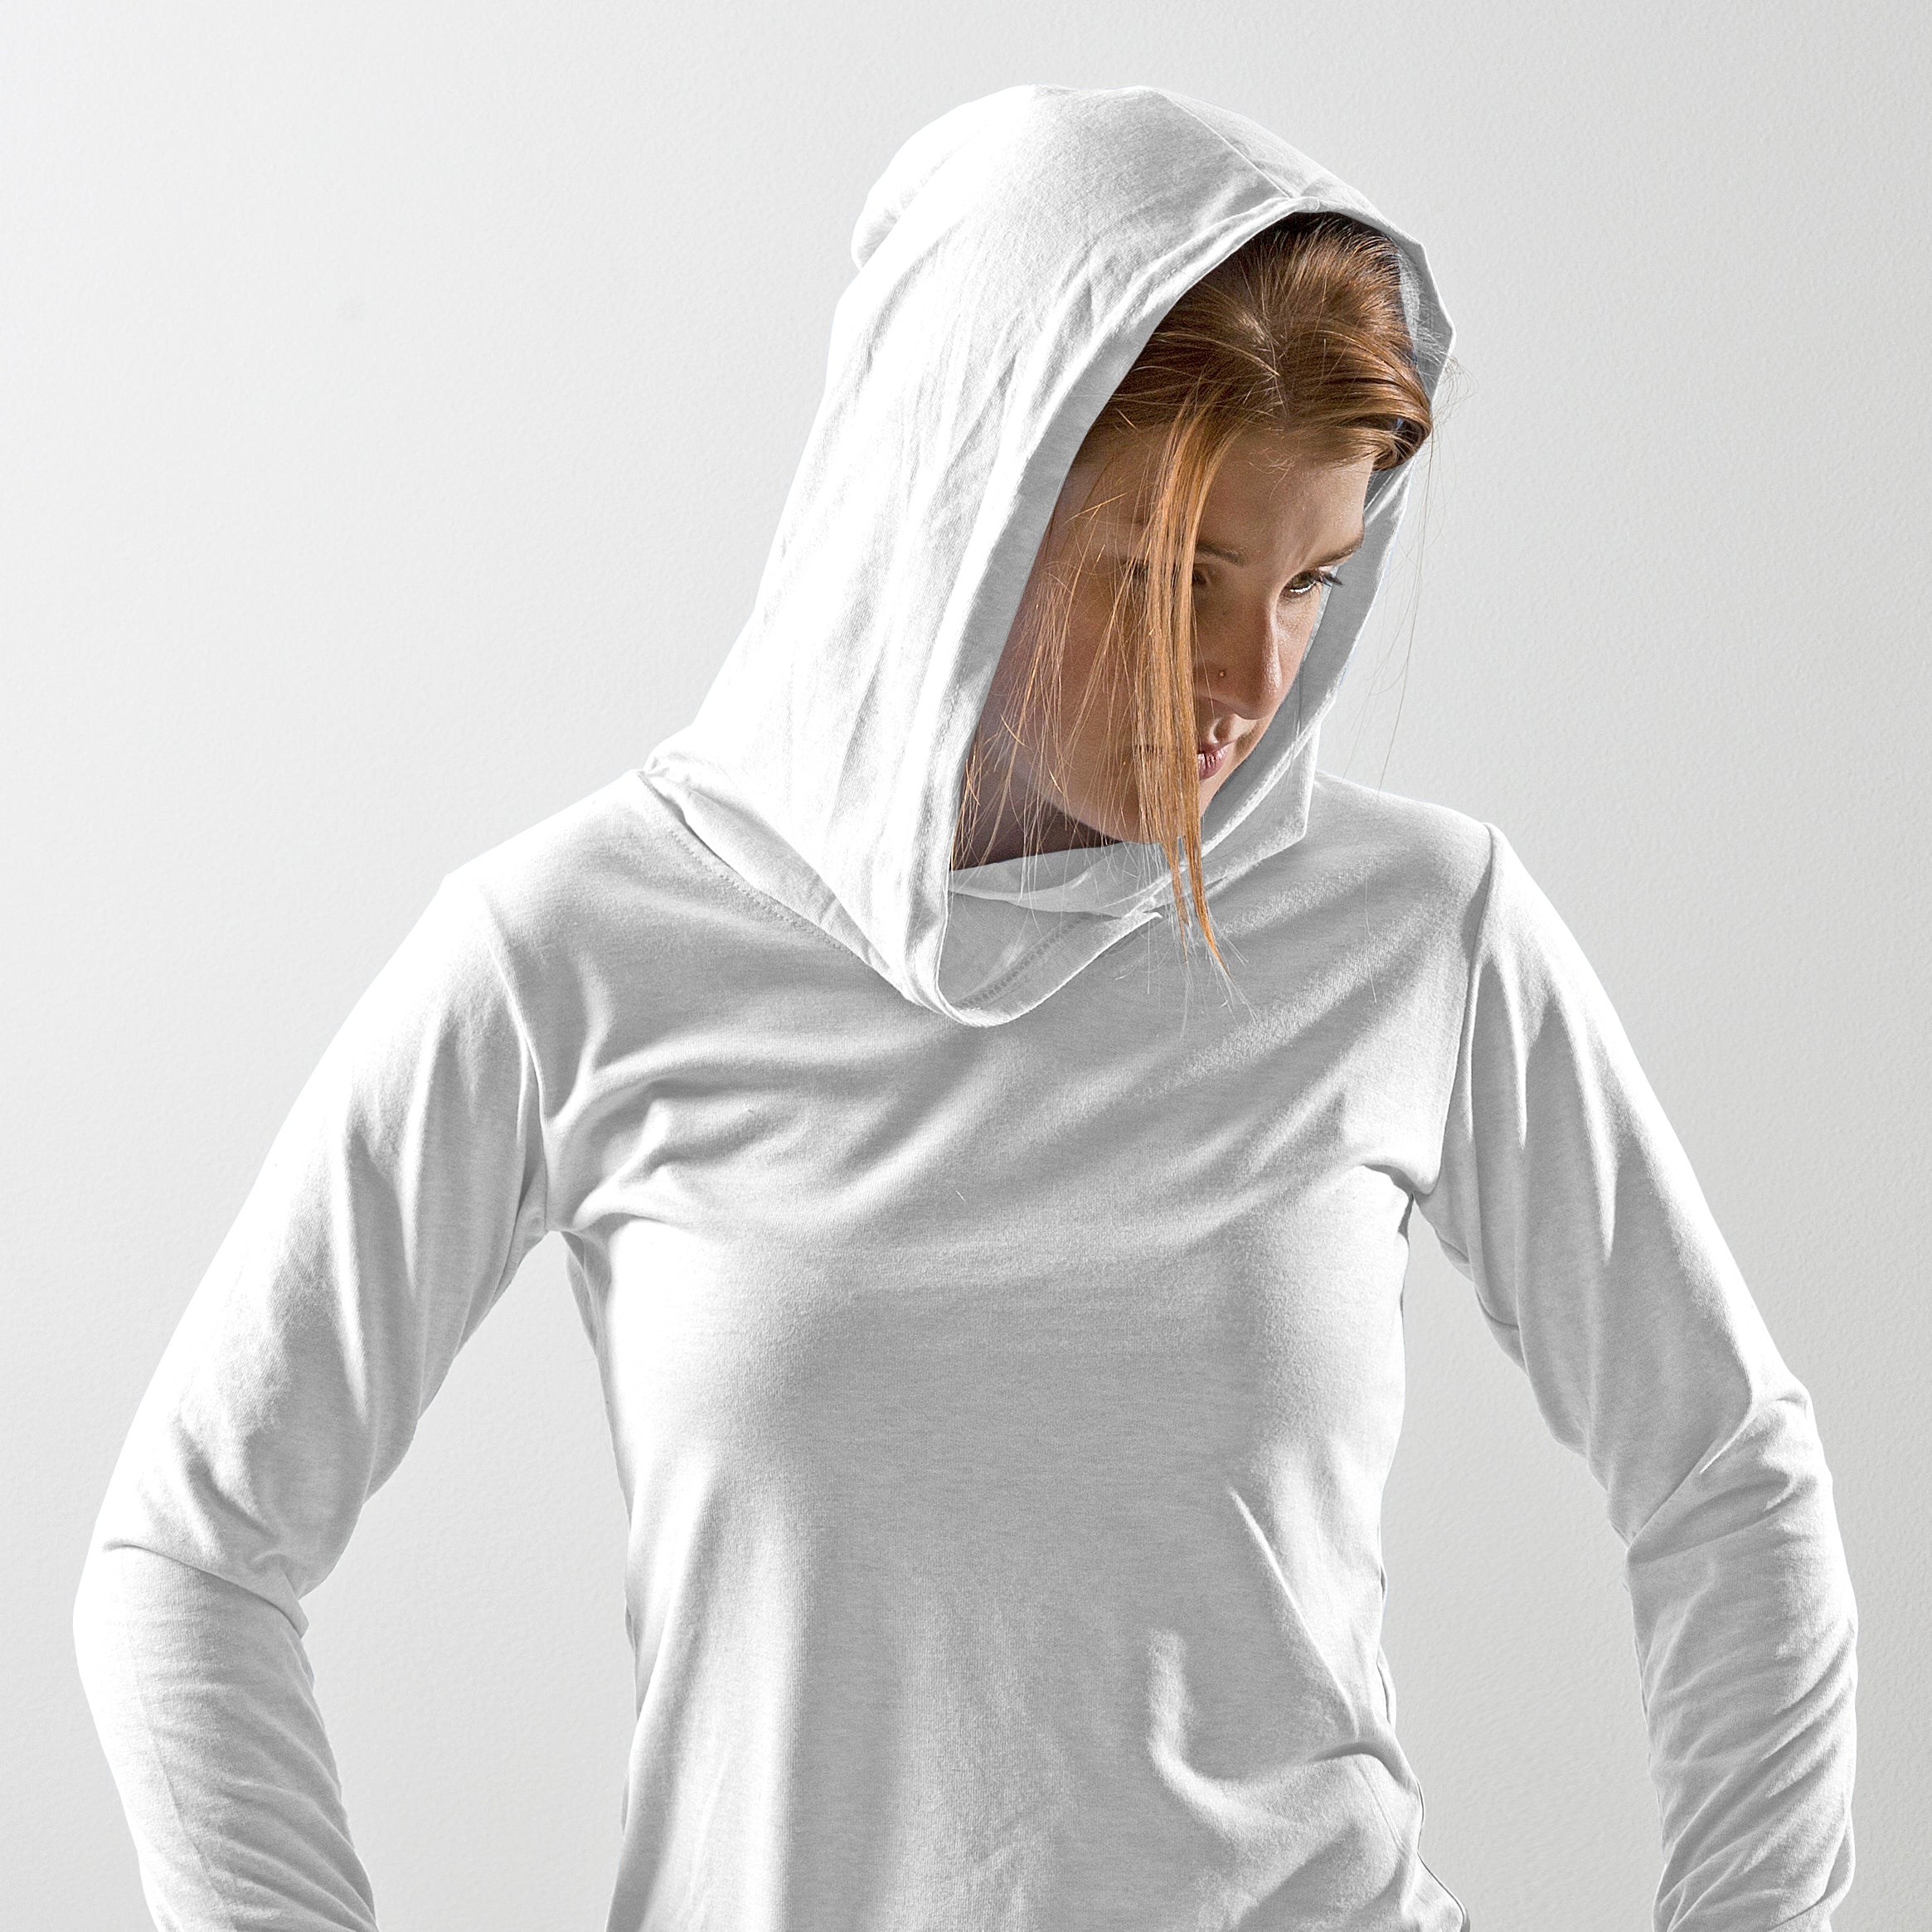 Hanes O4637 ComfortSoft Eco Smart Womens Full-Zip Hoodie Sweatshirt Ebony - Medium